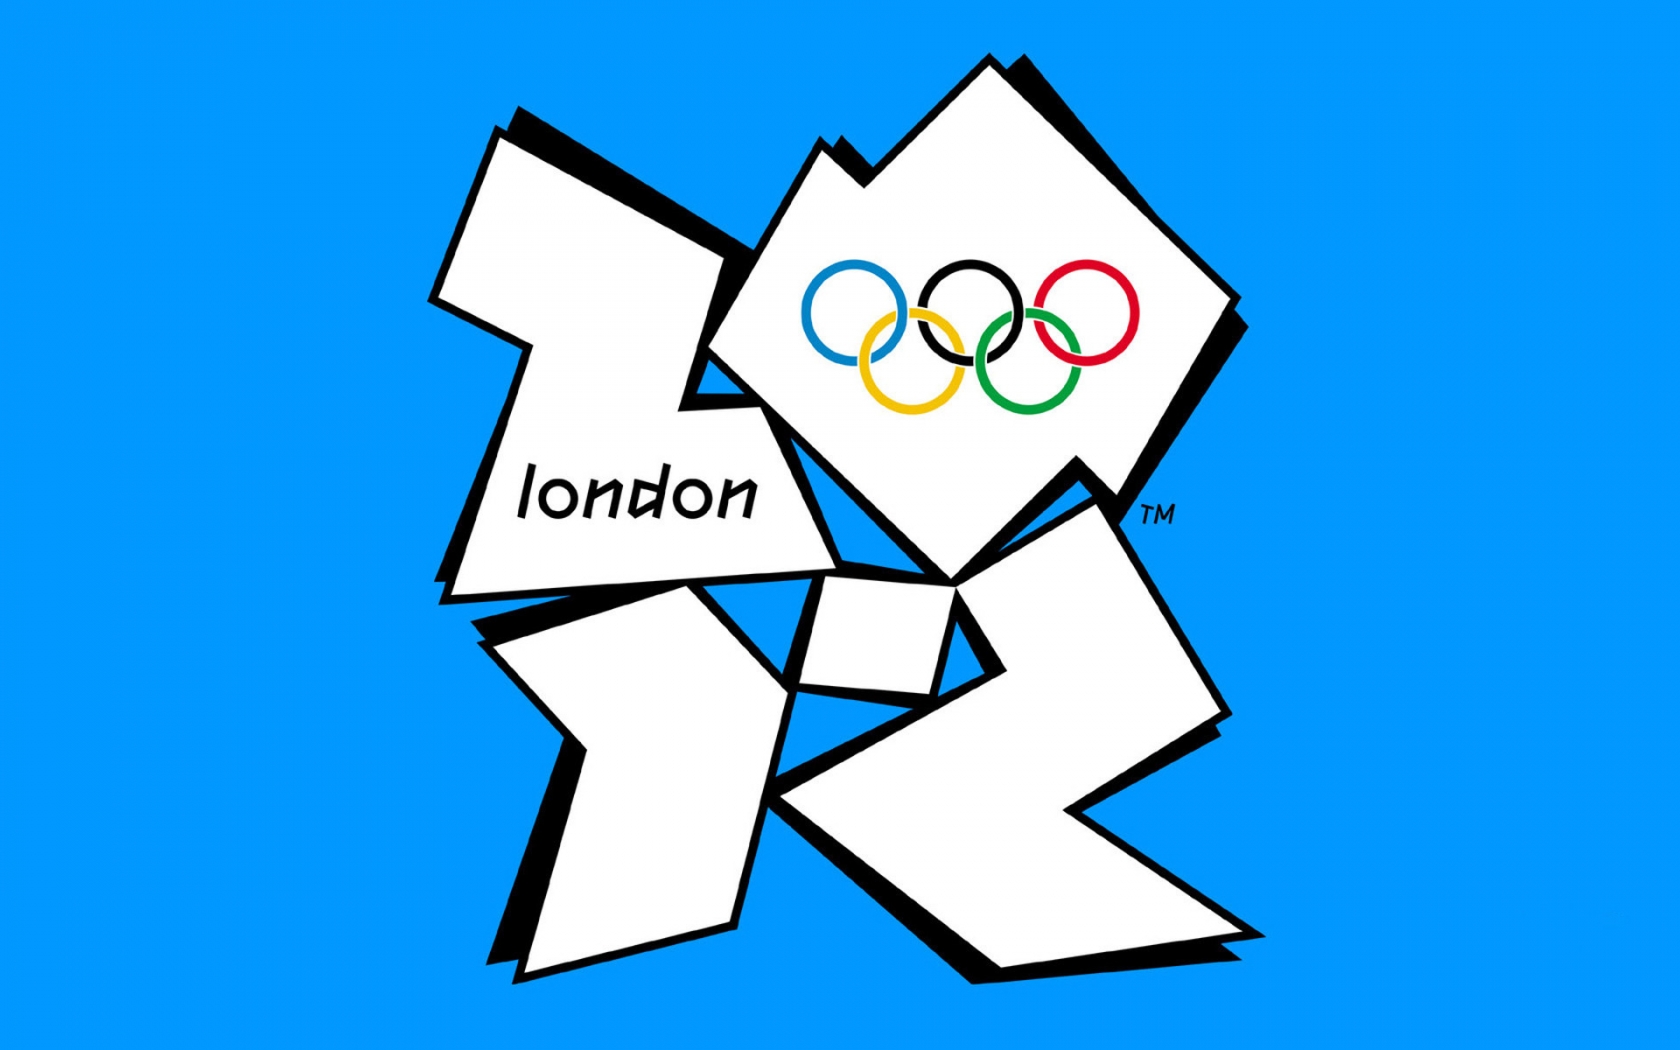 London 2012 Olympics Logo for 1680 x 1050 widescreen resolution